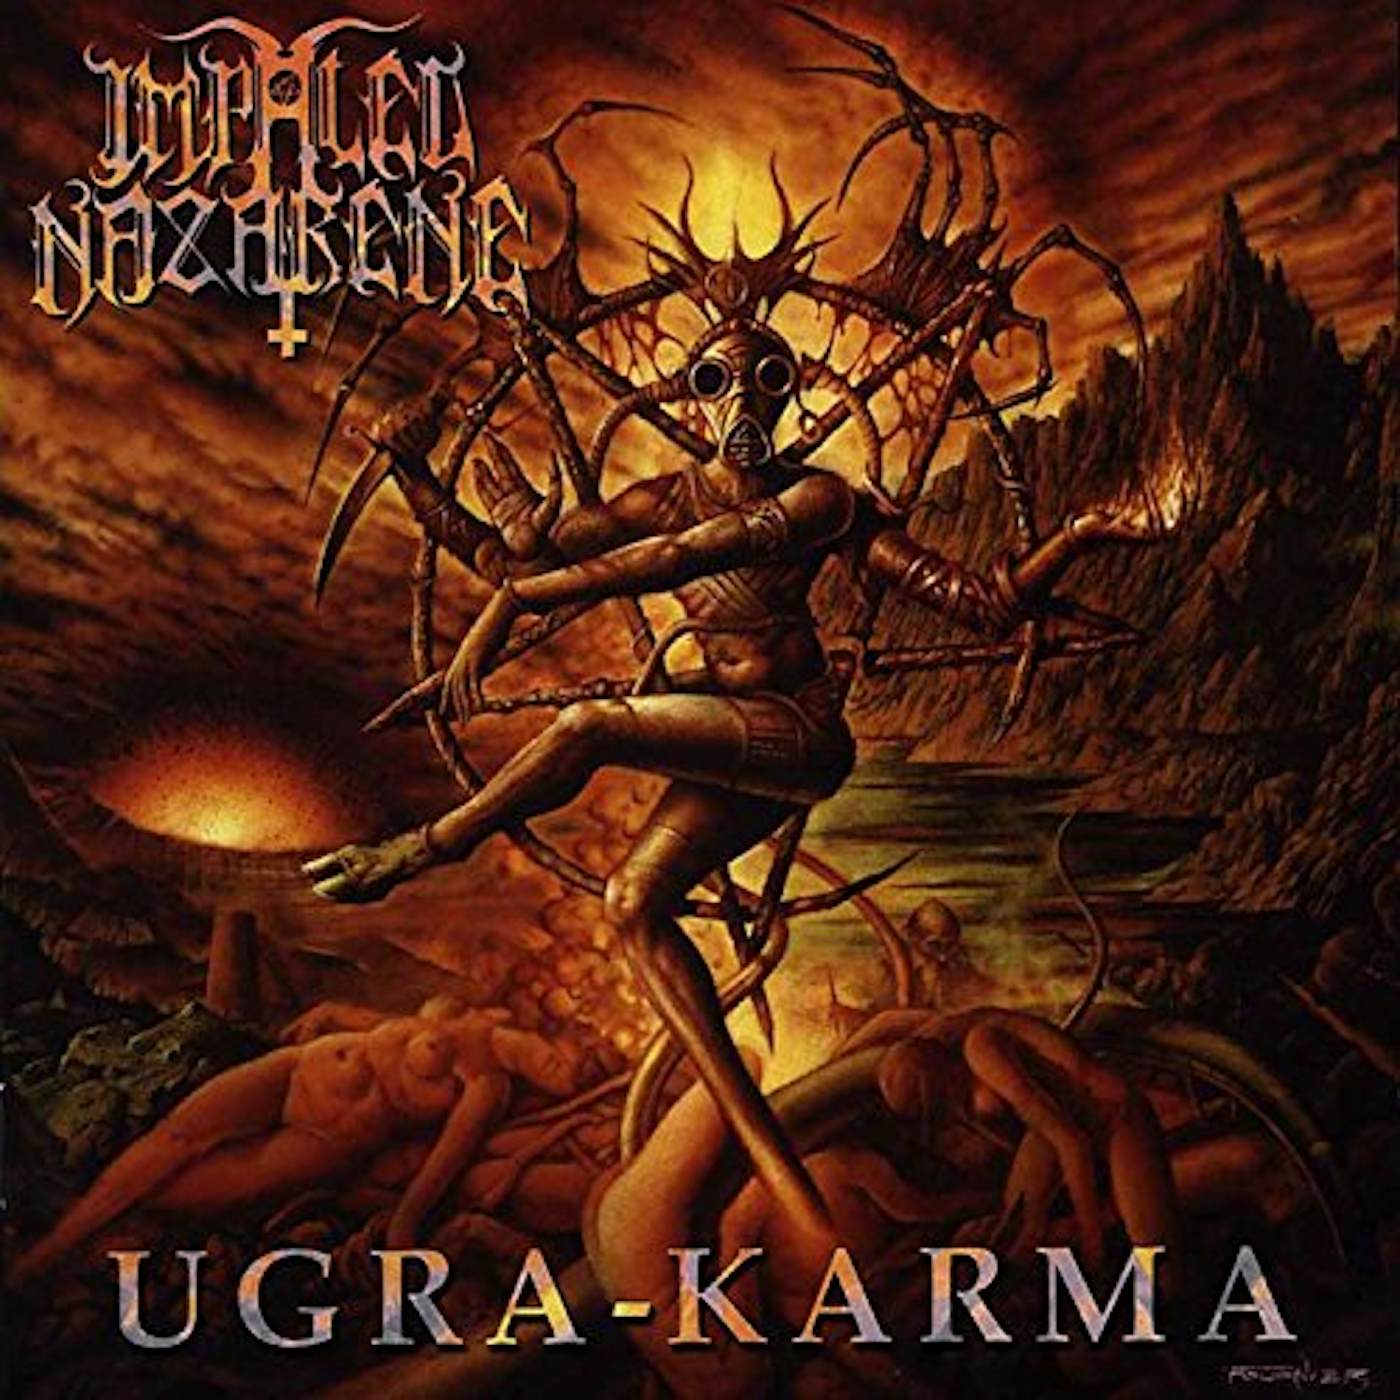 Impaled Nazarene Ugra Karma Vinyl Record